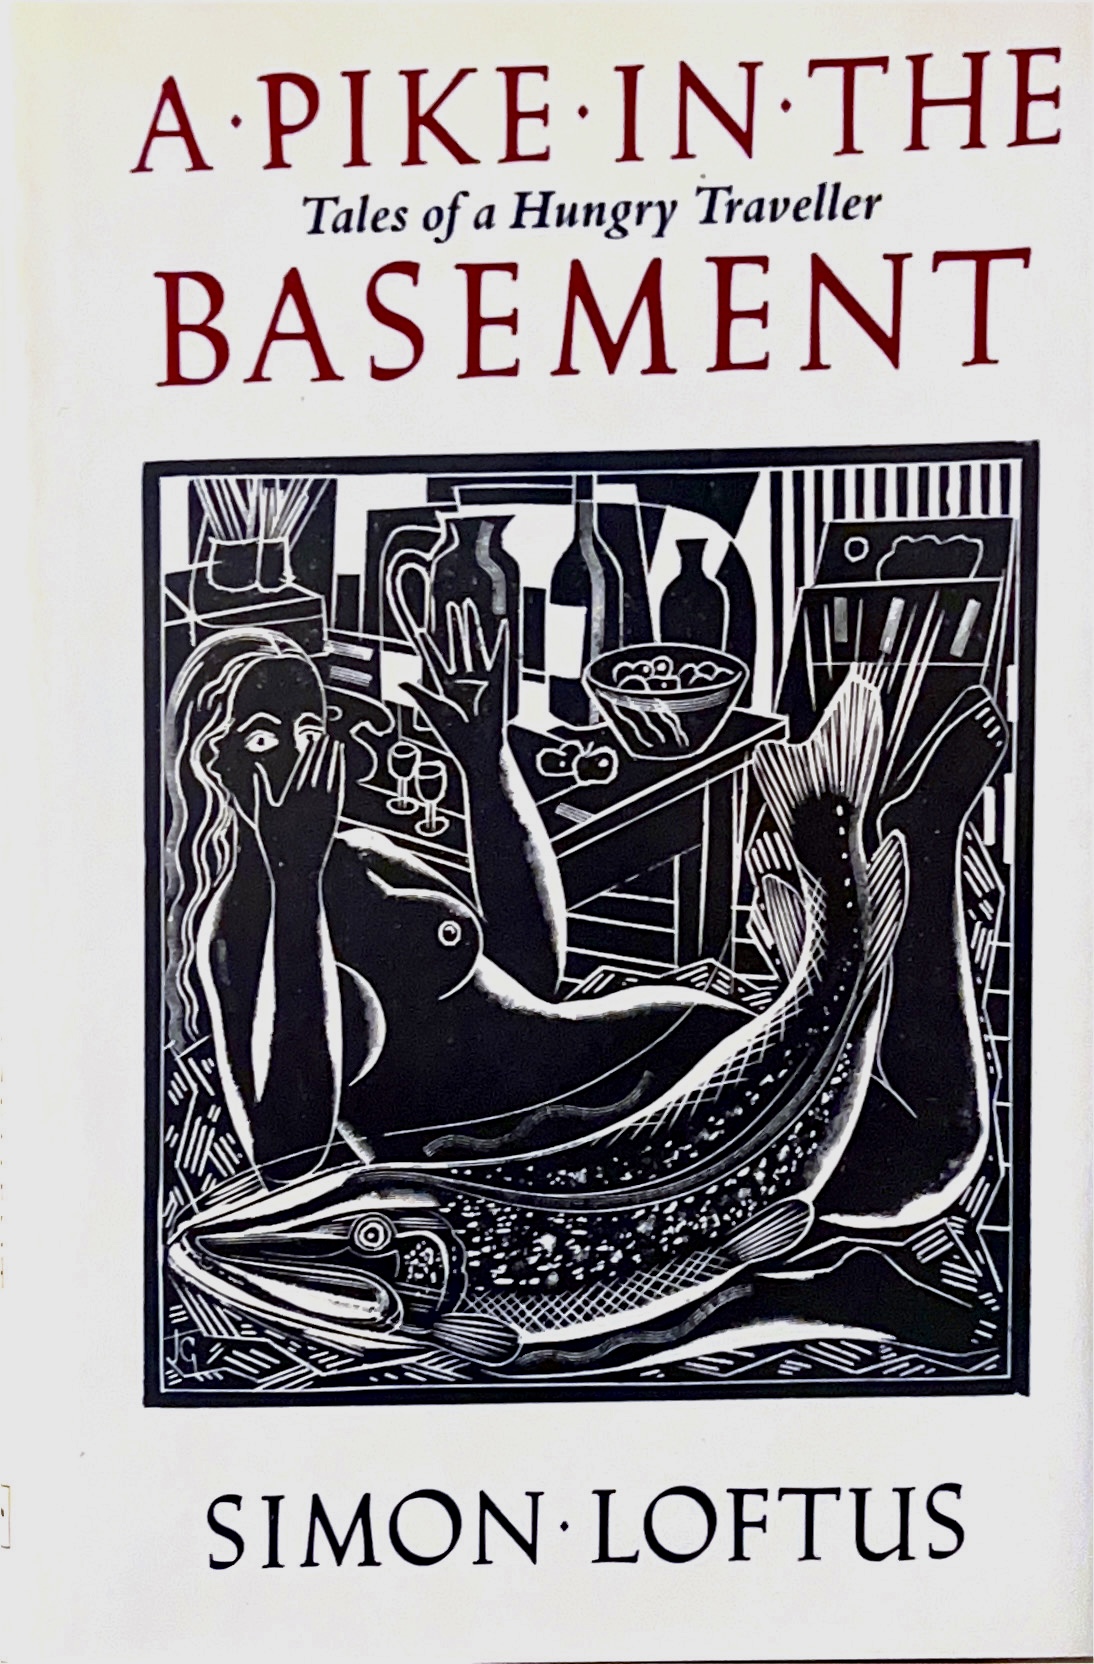 A Pike in the Basement: Tales of a Hungry Traveller - Loftus, Simon; Gibbs, Jonathan (illustrator)